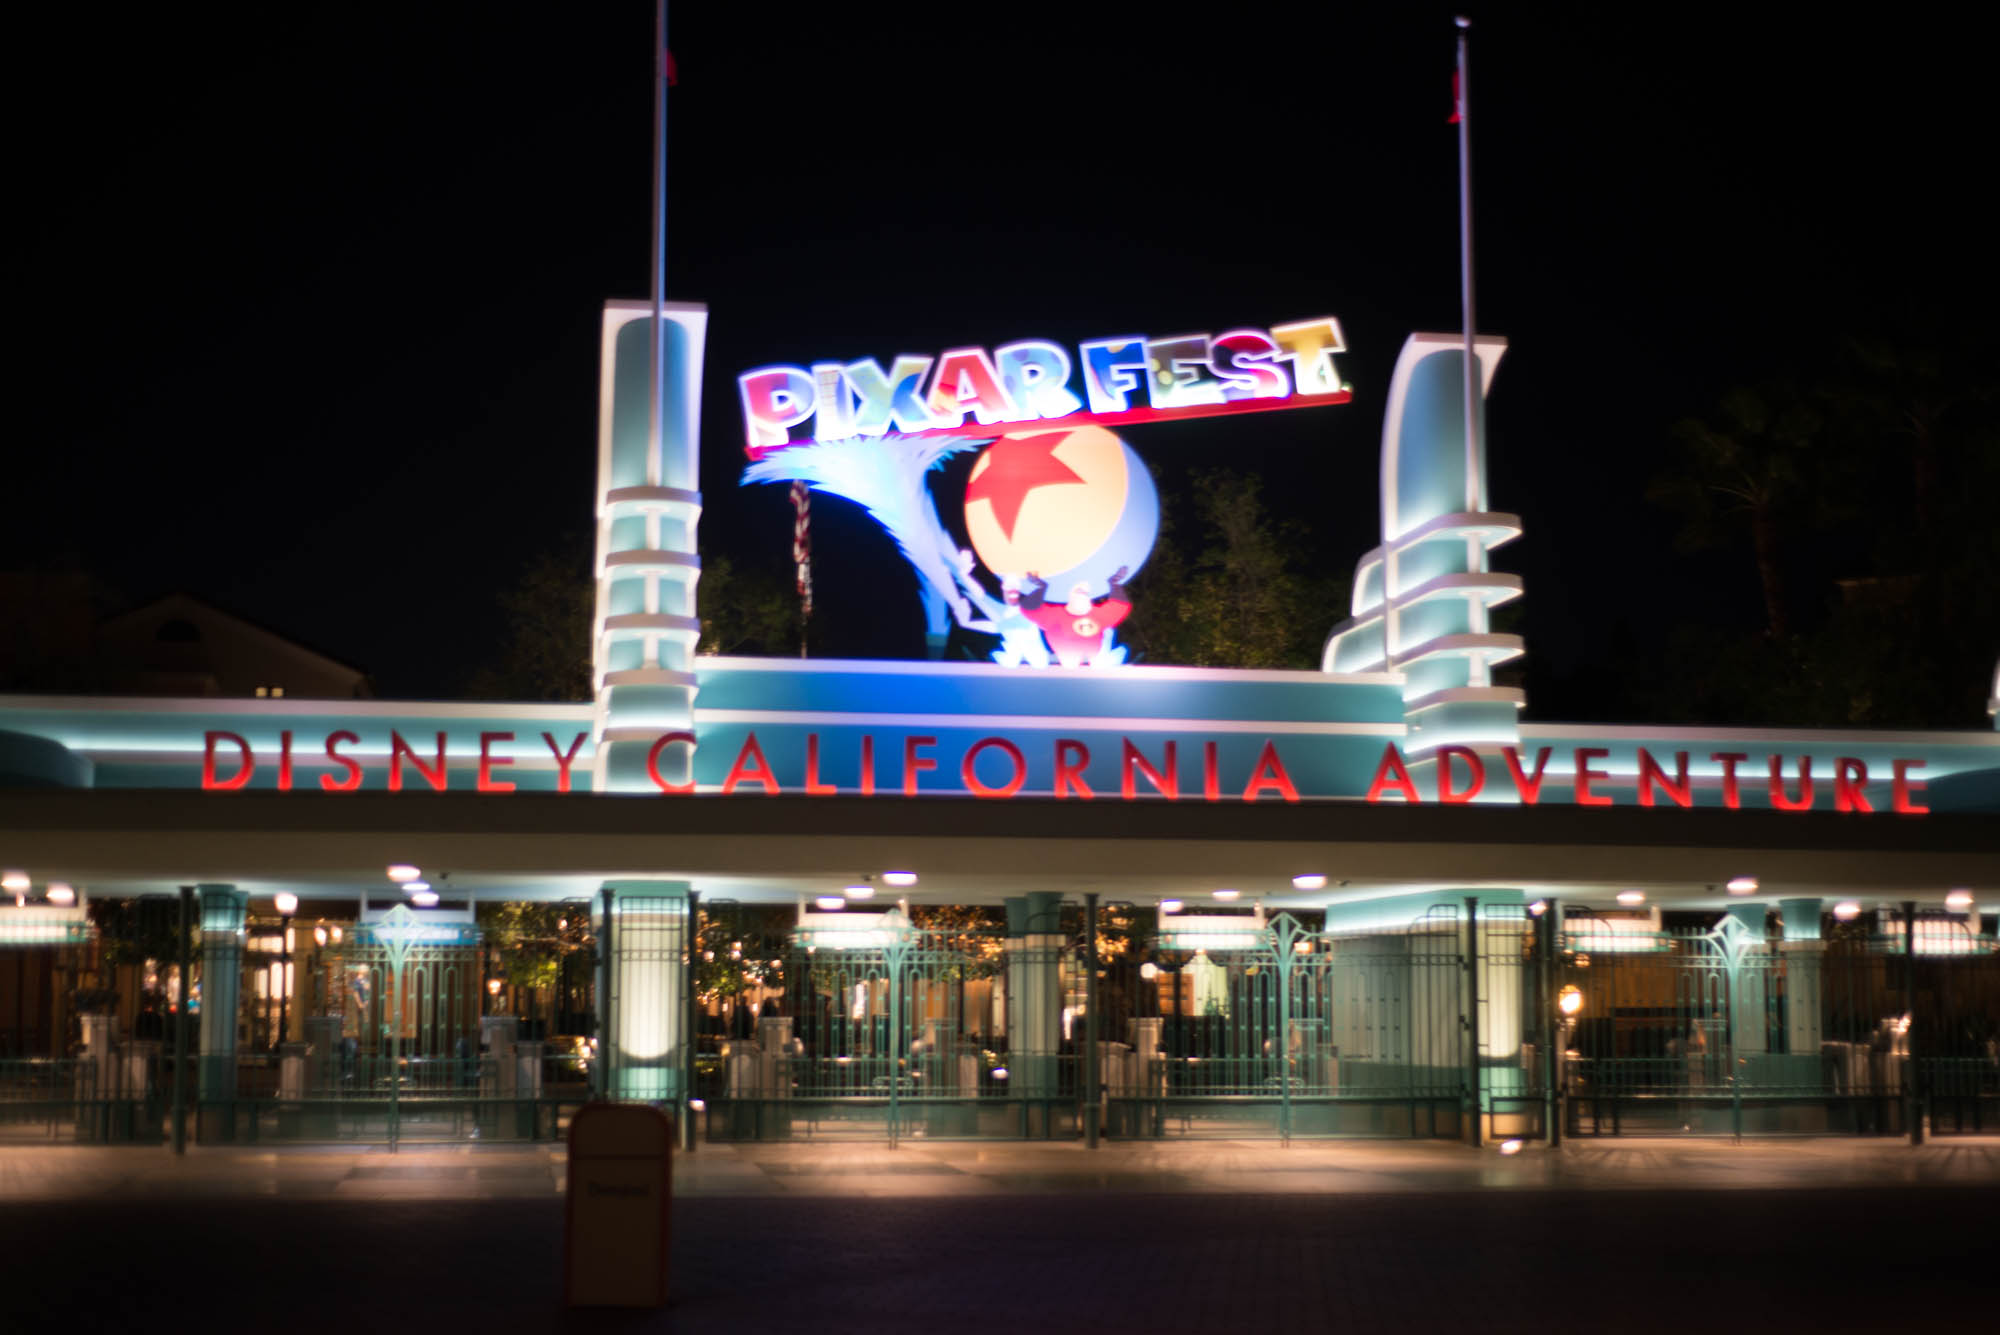 Pixar Fest Sign at Disneyland's California Adventure Entrance